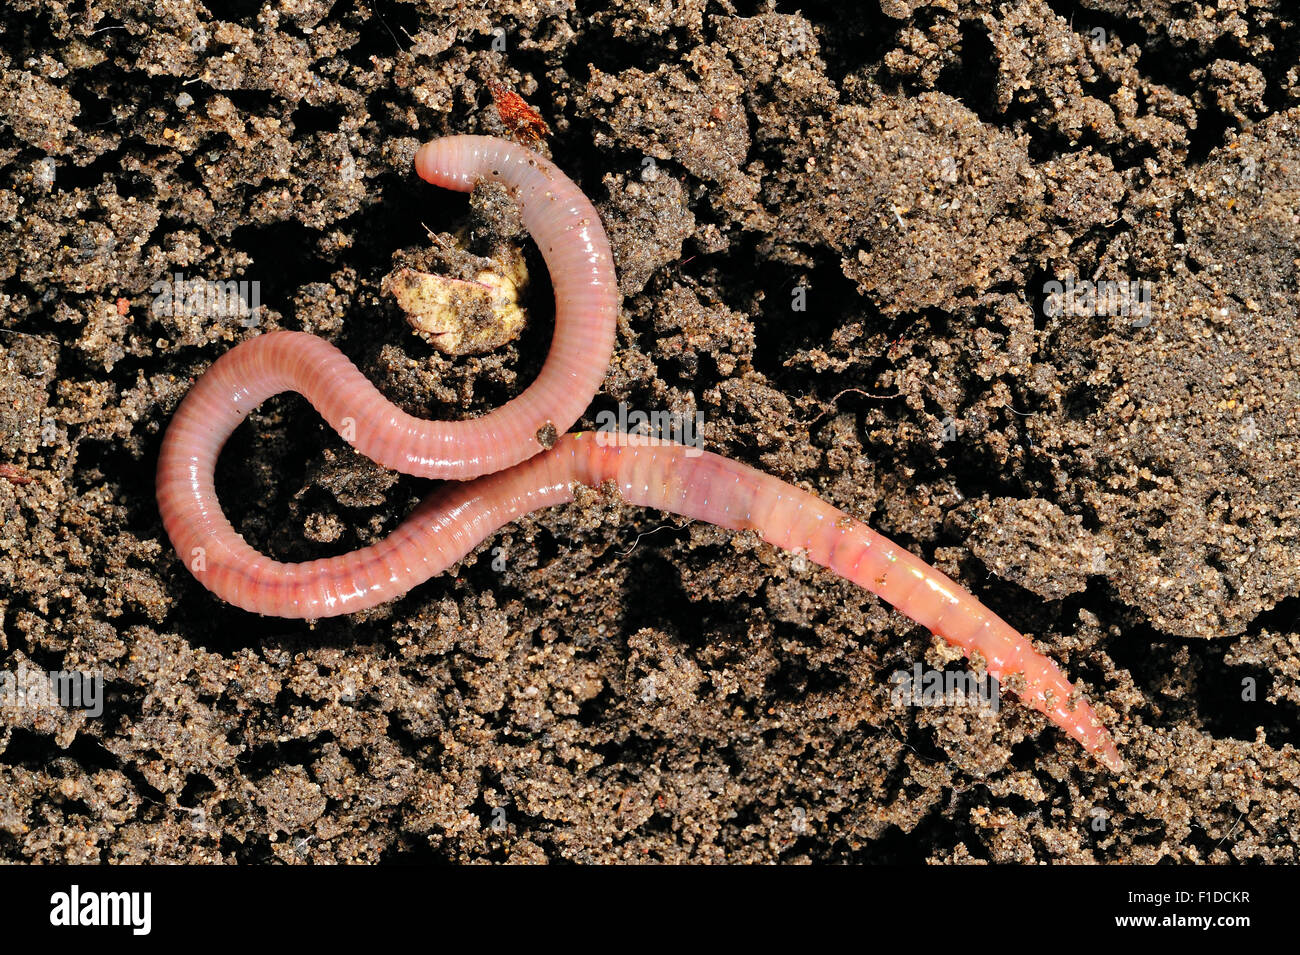 Common earthworm (Lumbricus terrestris) on soil Stock Photo